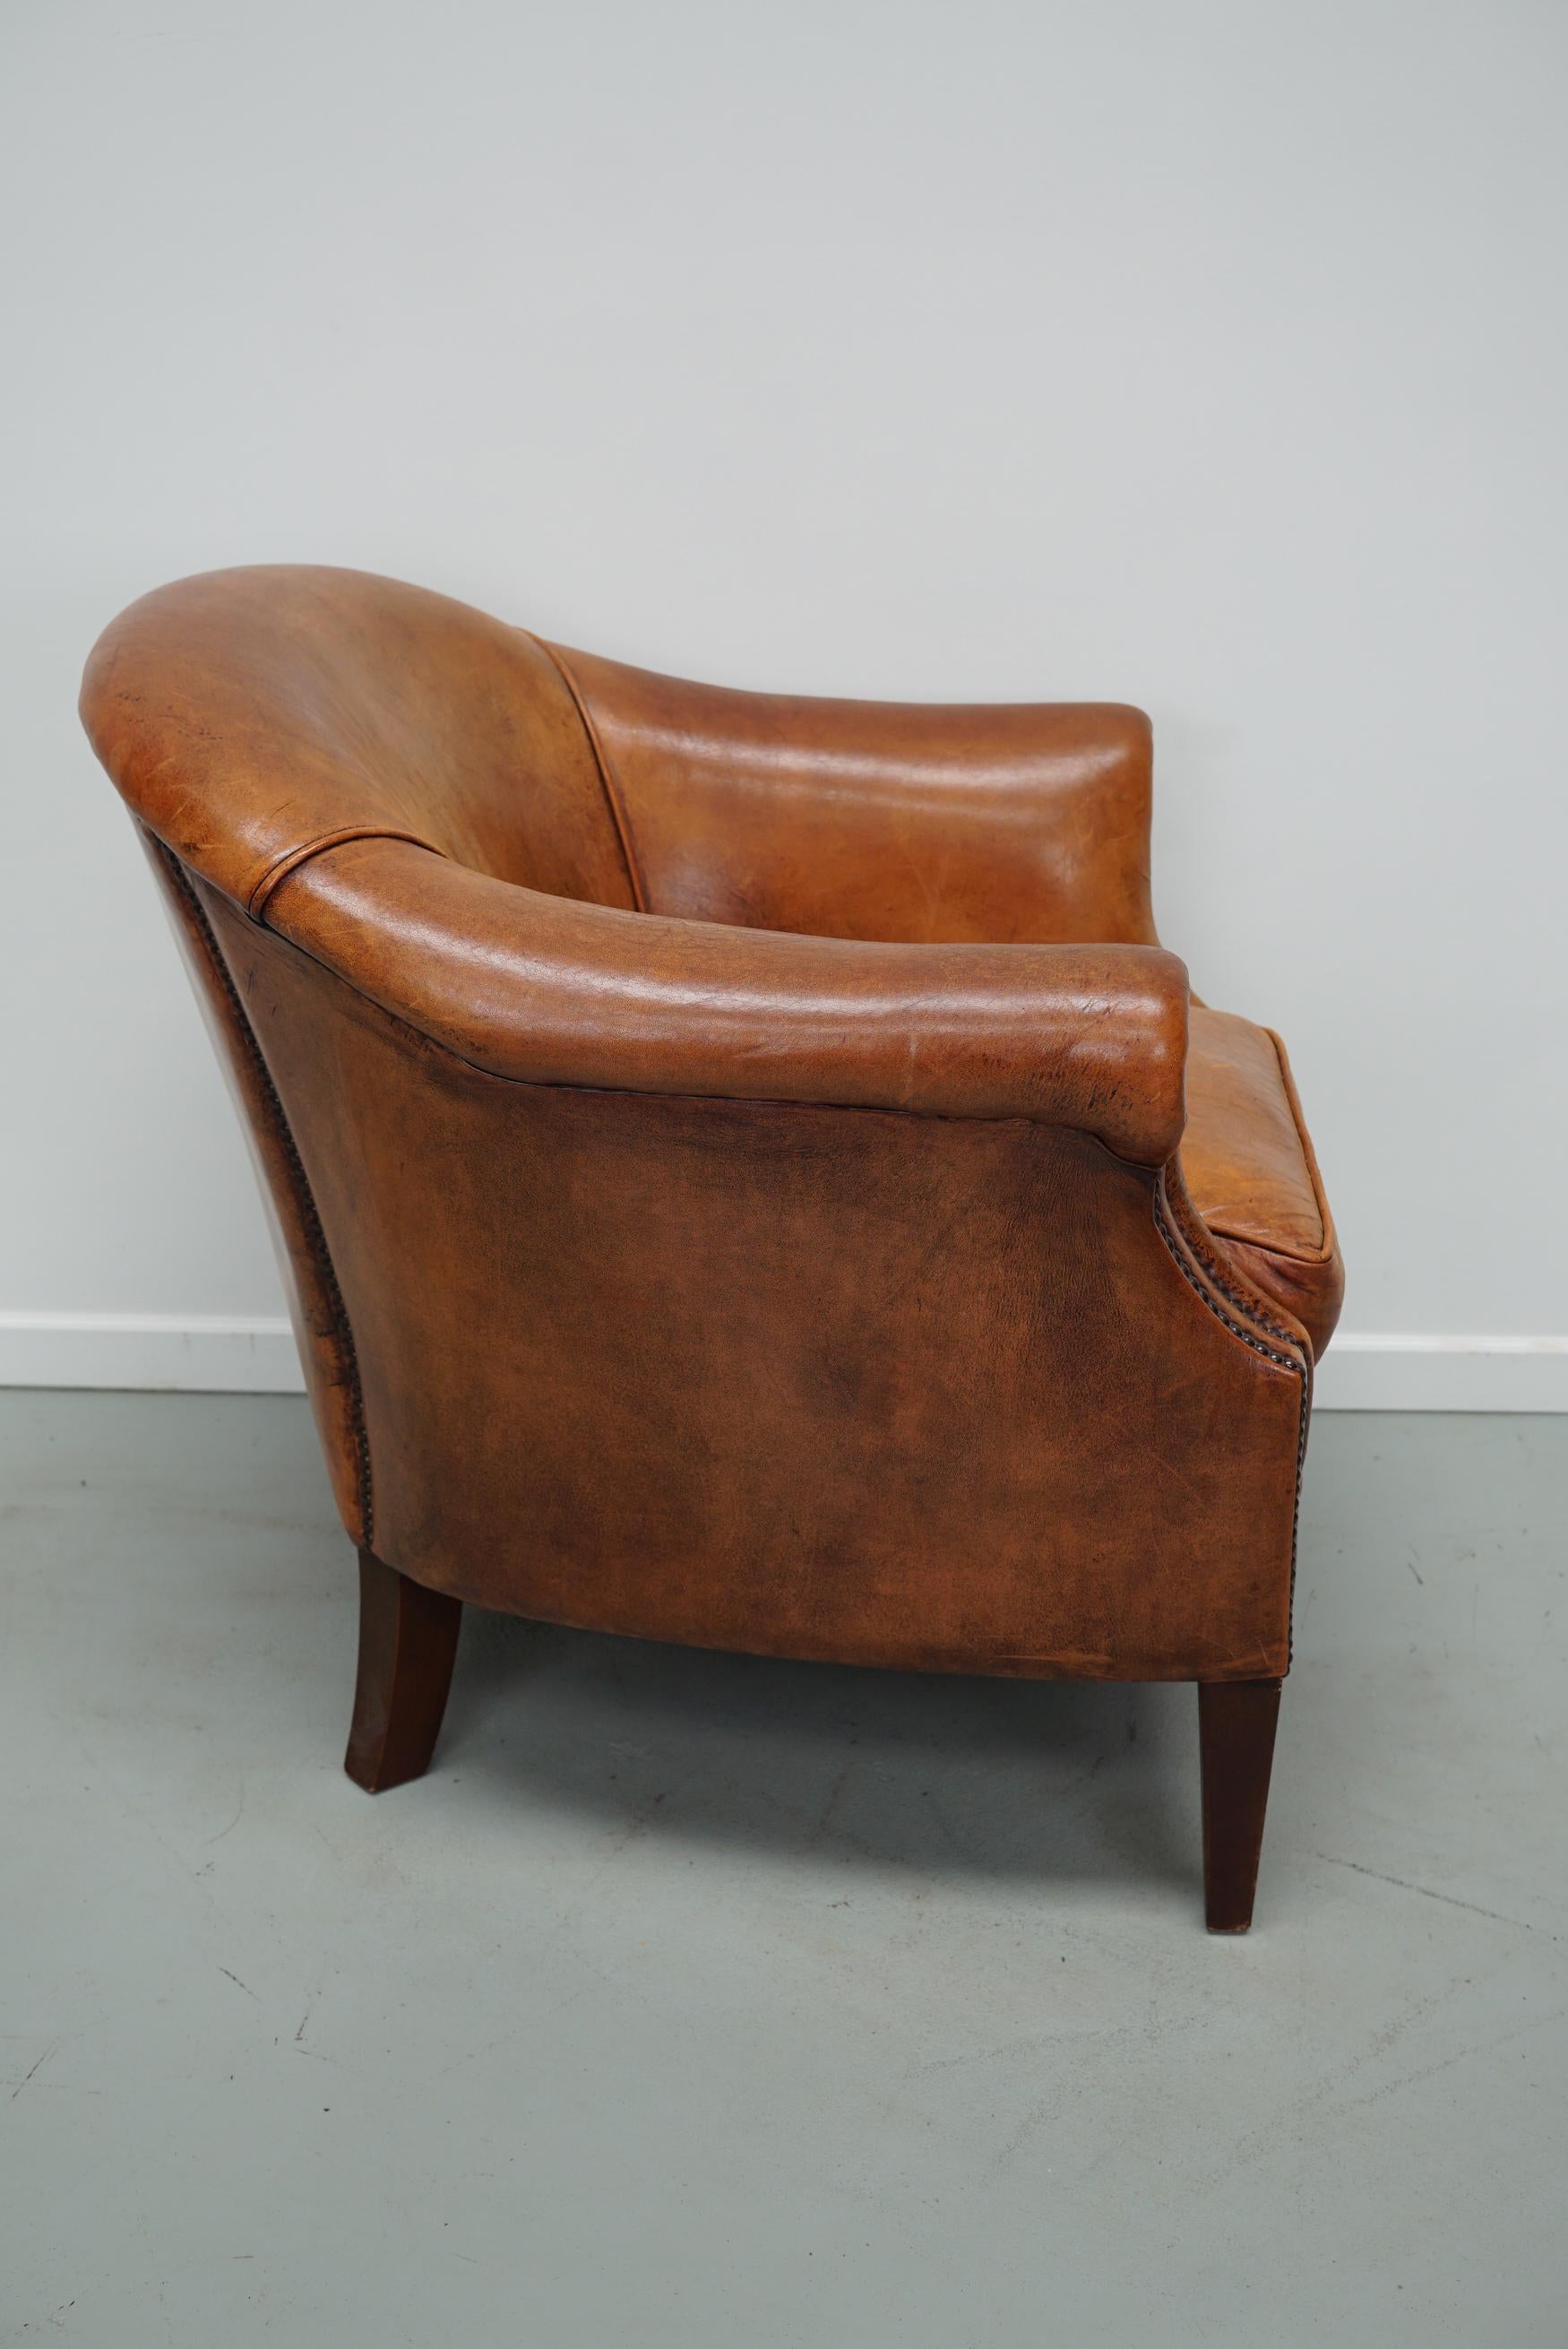 Industrial  Vintage Dutch Cognac Colored Leather Club Chair For Sale